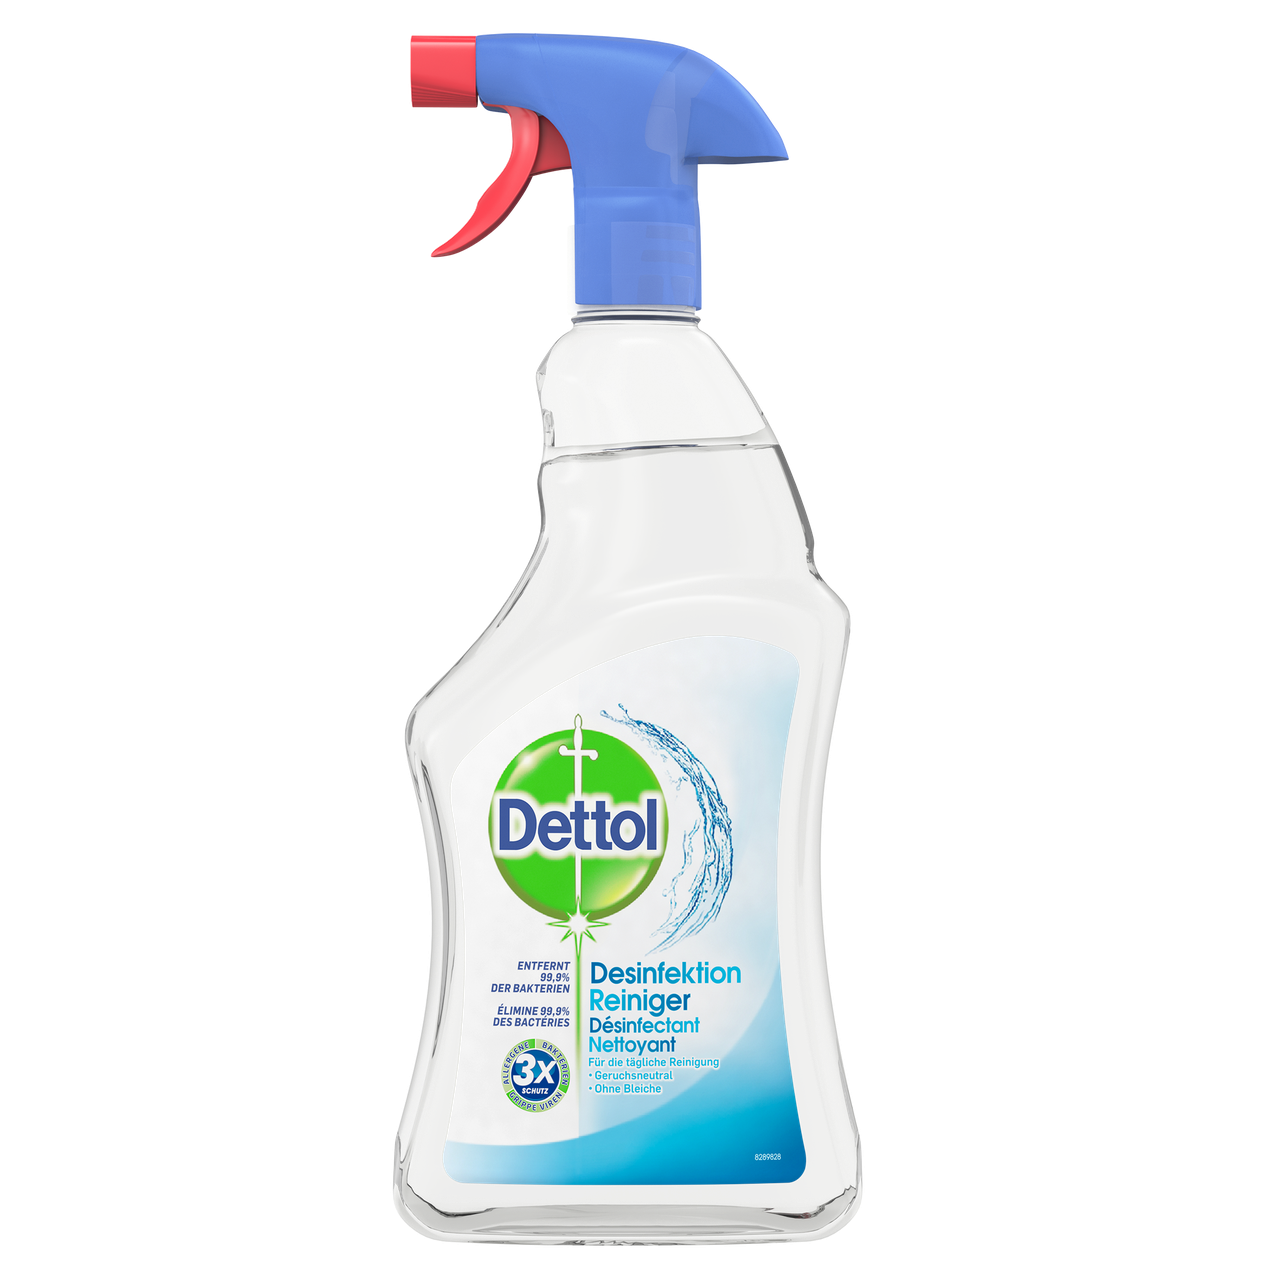 Image of Dettol Desinfektion Reiniger Standard (750ml)